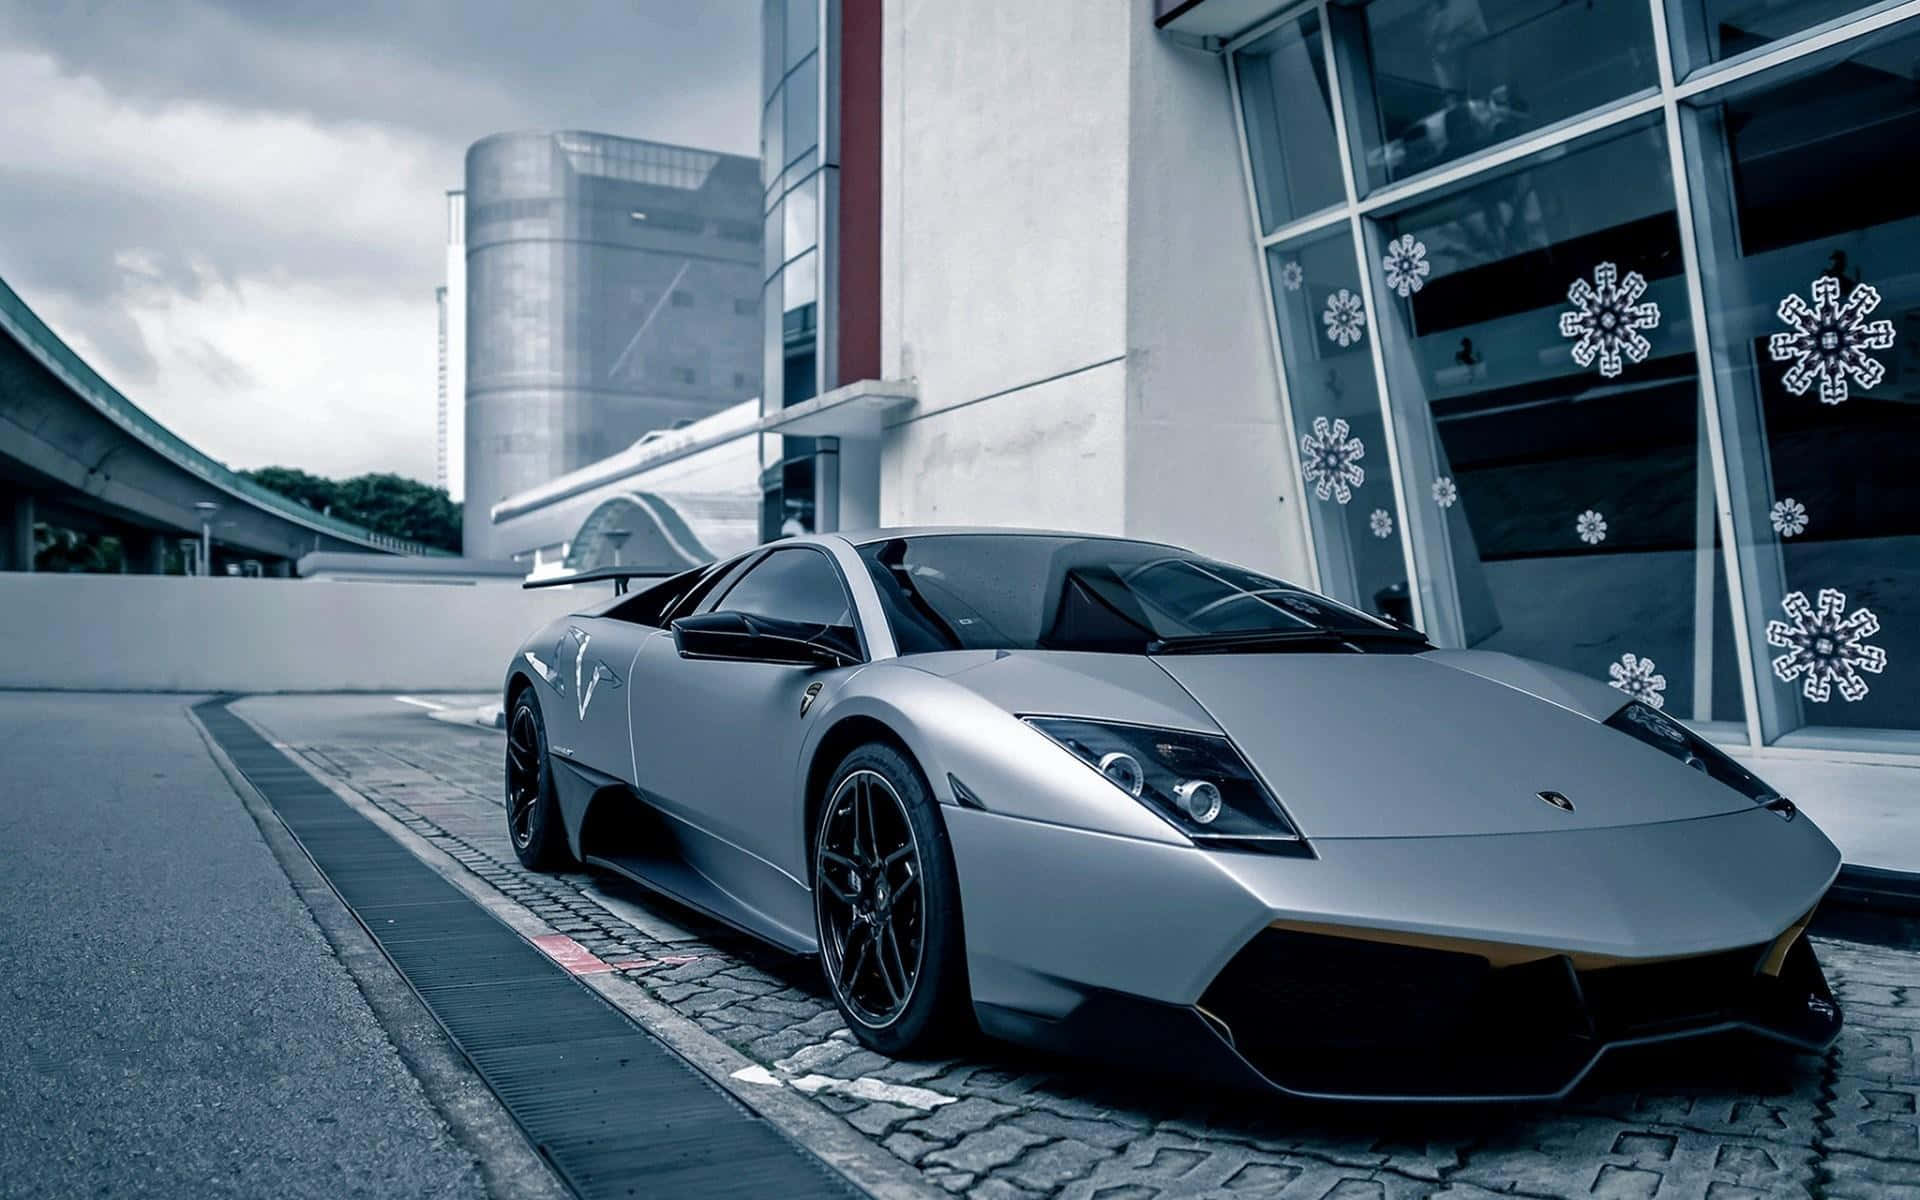 Majestic Lamborghini Murciélago Showcasing Its Sleek Design and Powerful Performance Wallpaper